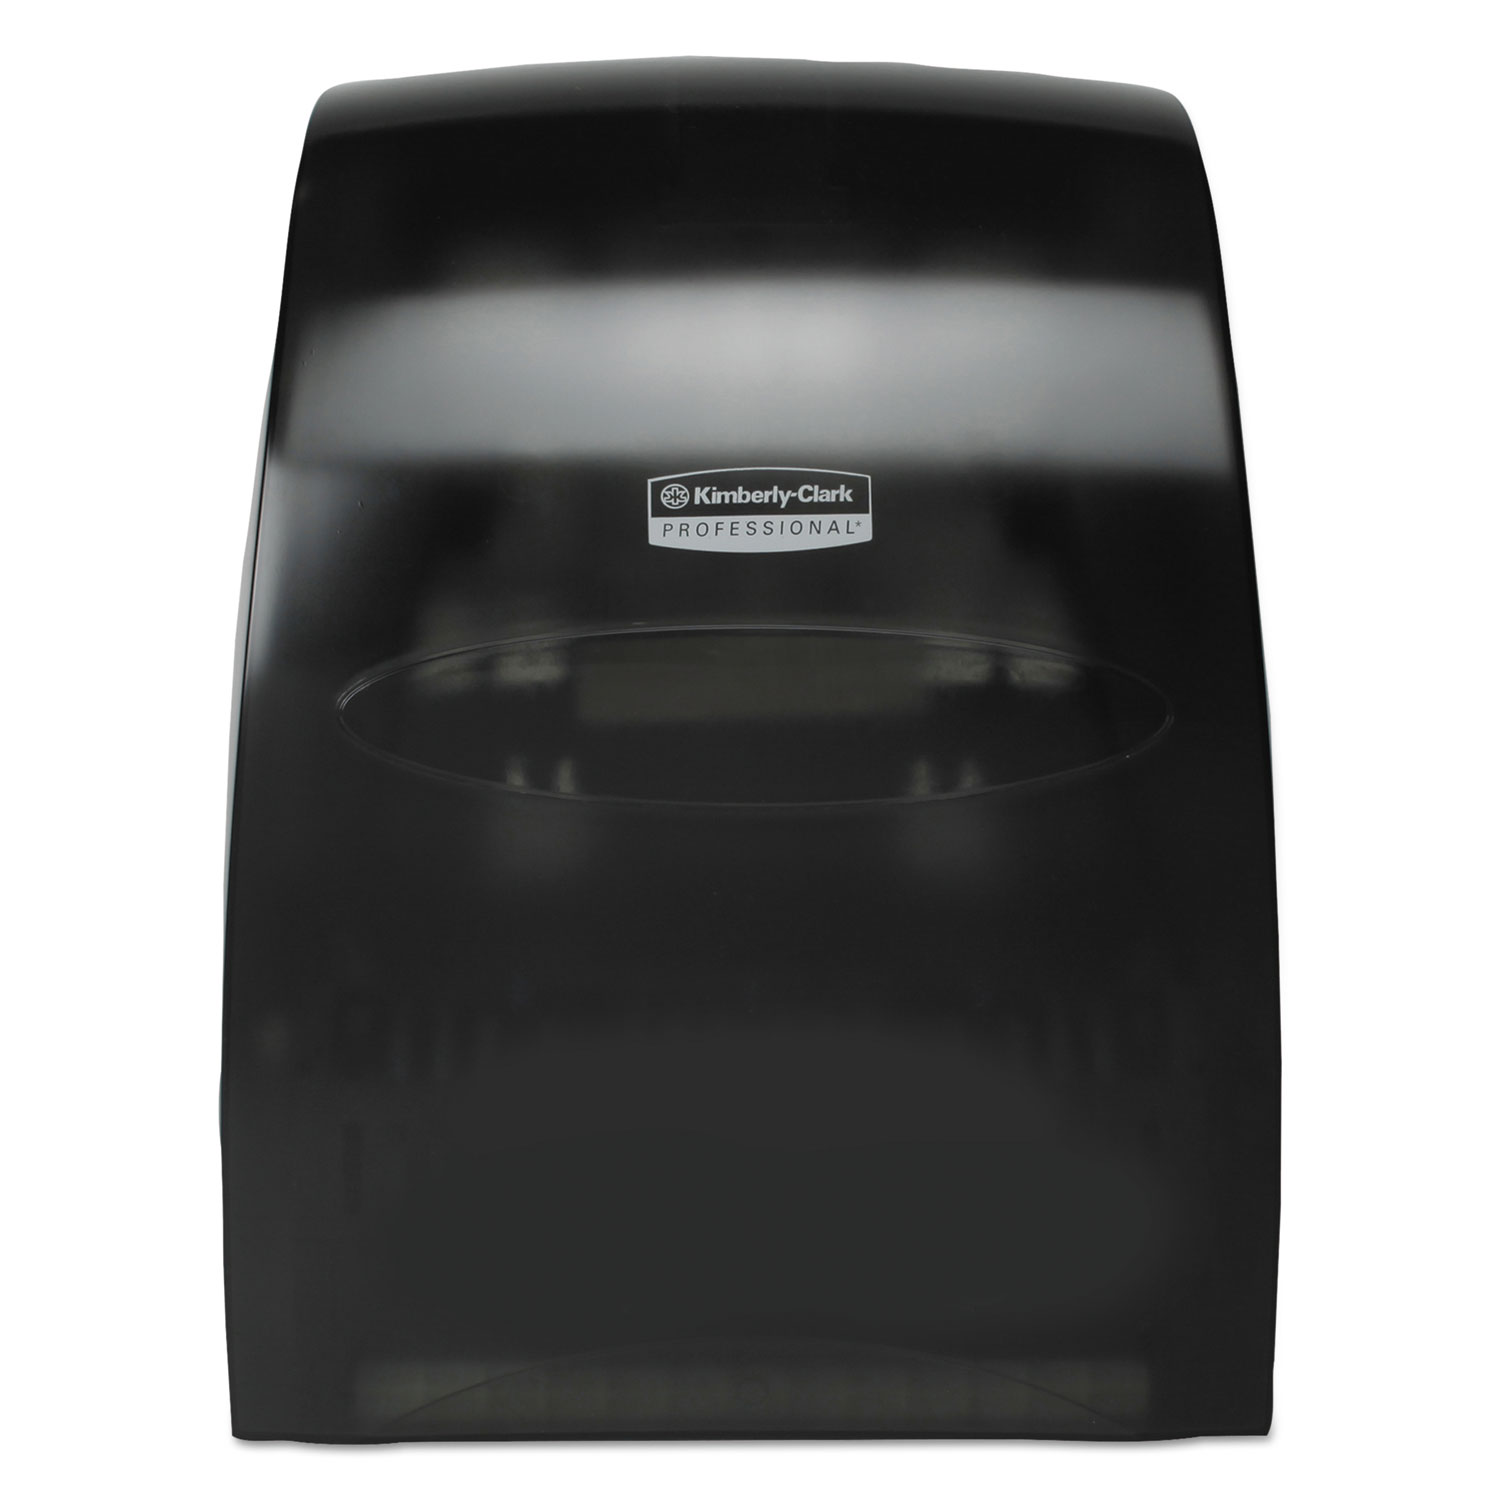 Sanitouch Hard Roll Towel Dispenser, 12 63/100w x 10 1/5d x 16 13/100h, Smoke